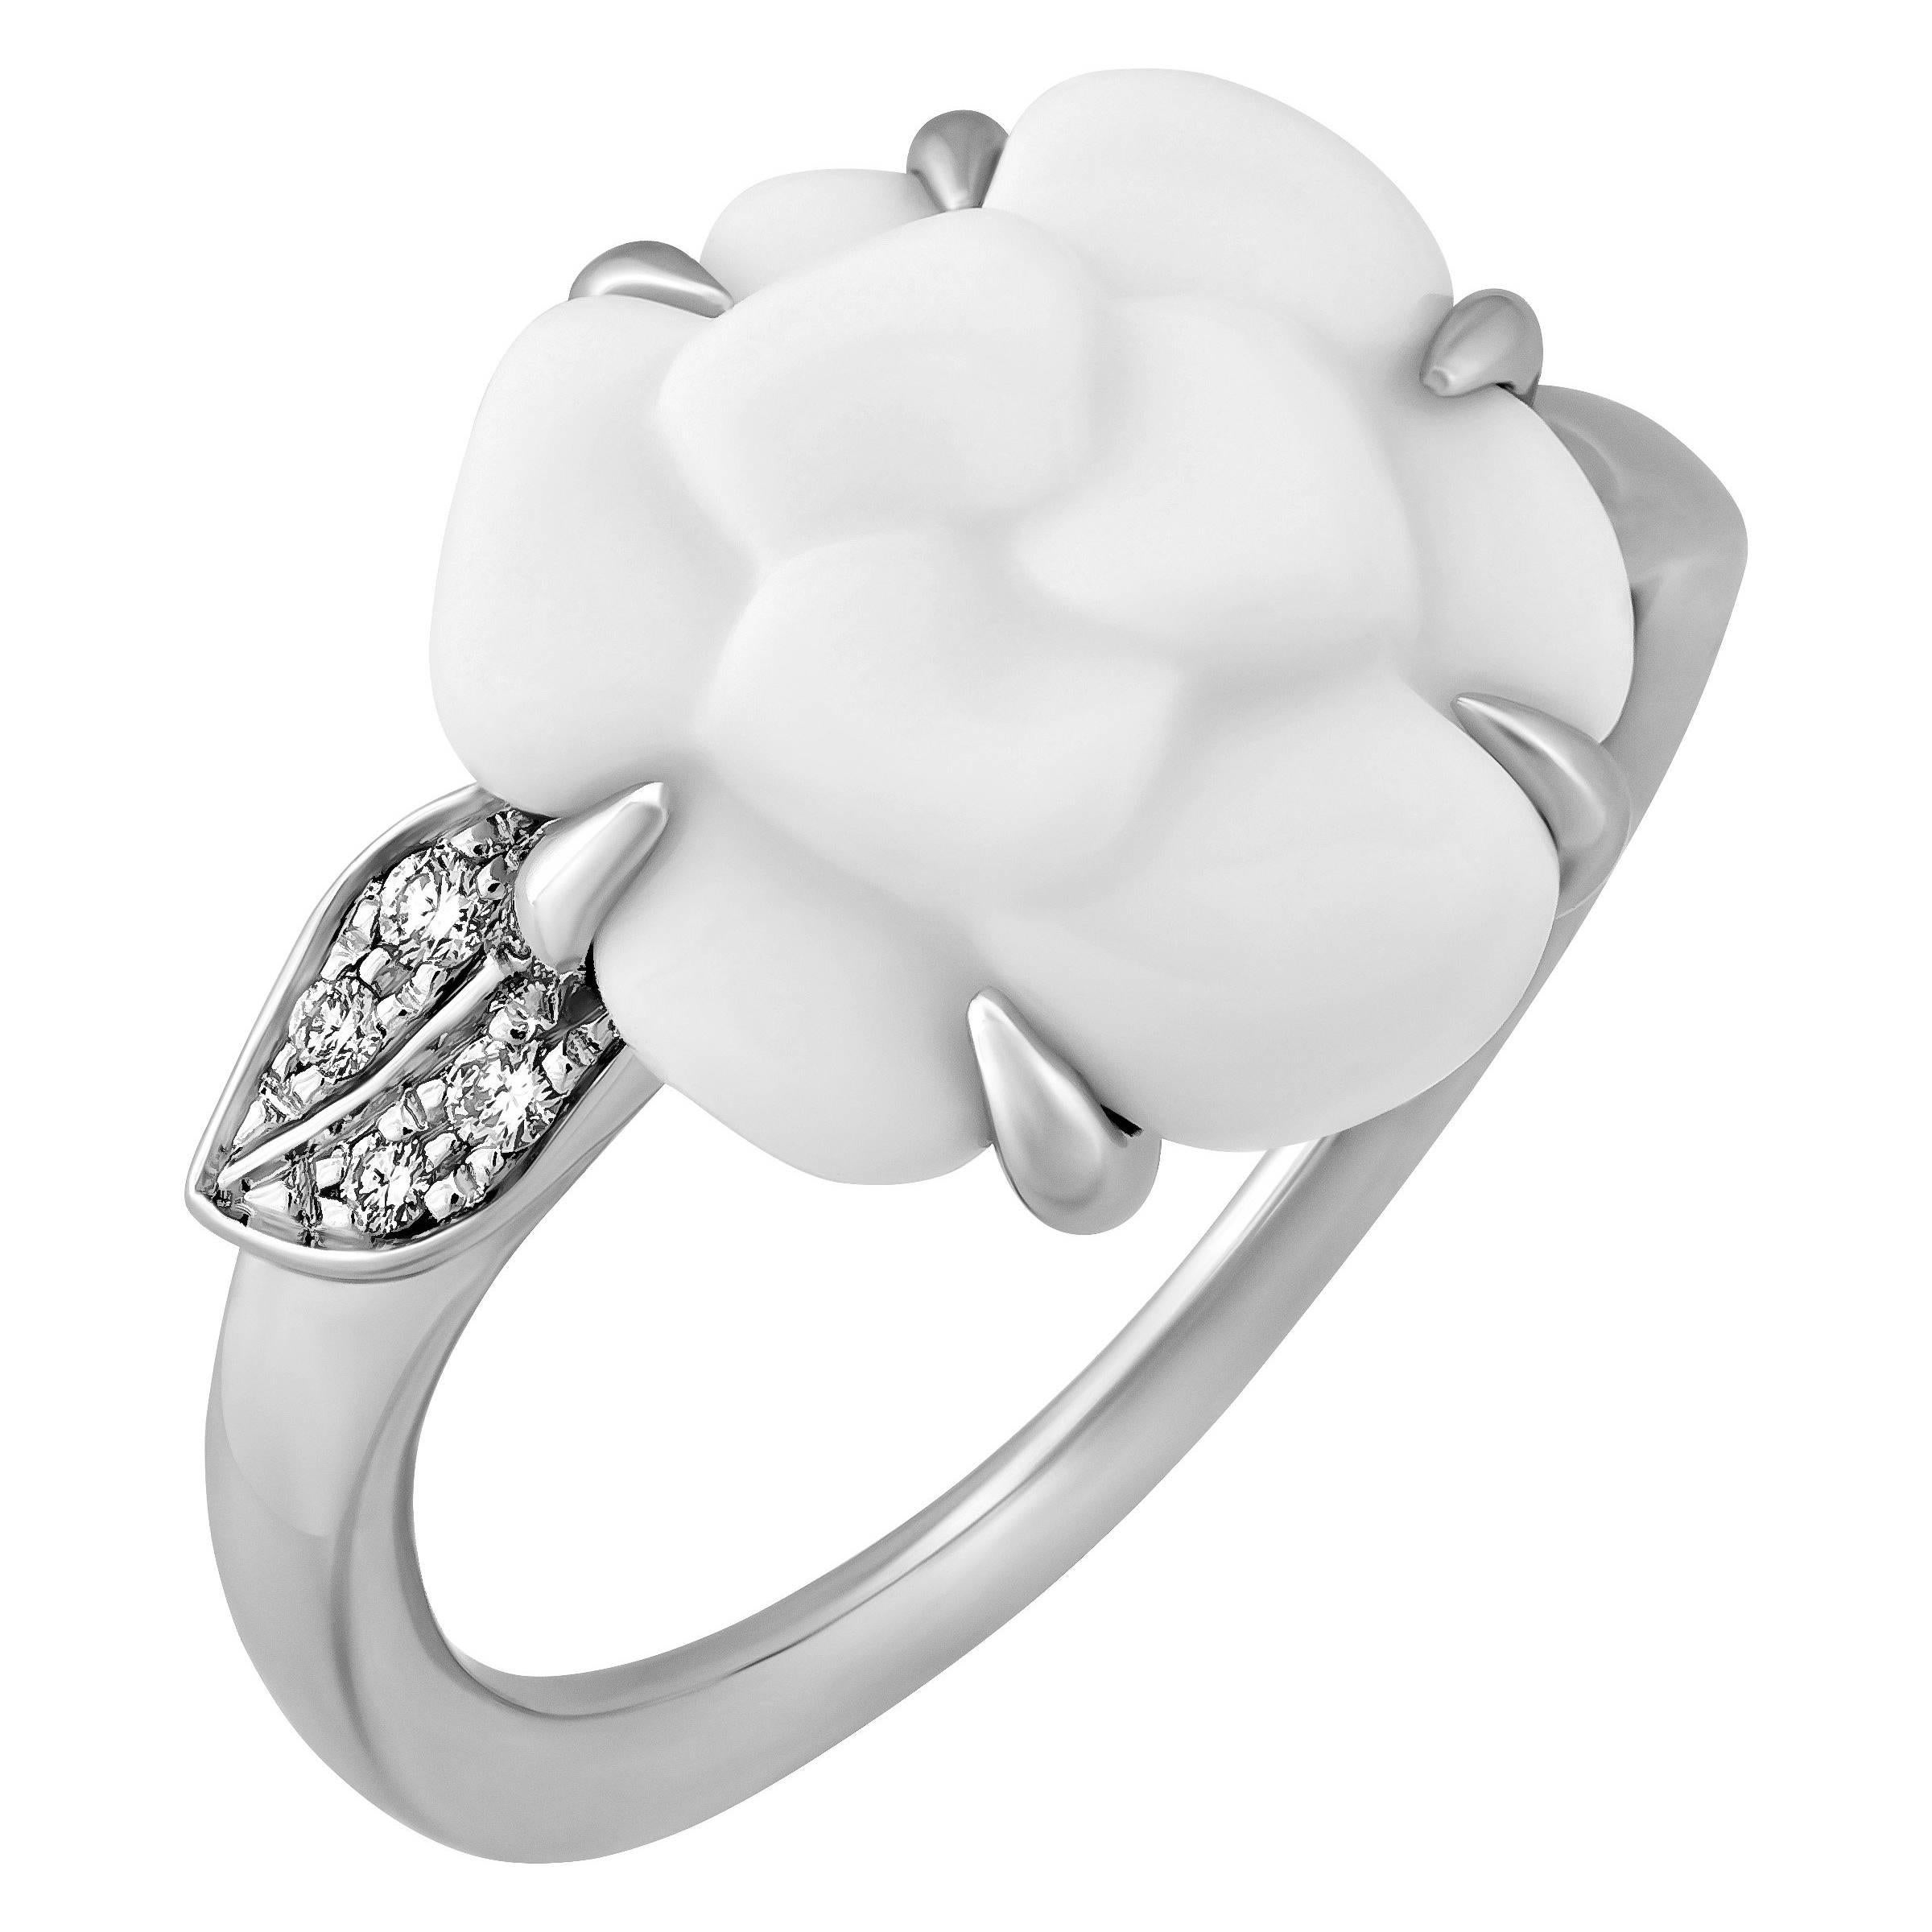 Chanel 18K White Gold Camellia Diamond Ring Size: 5.75